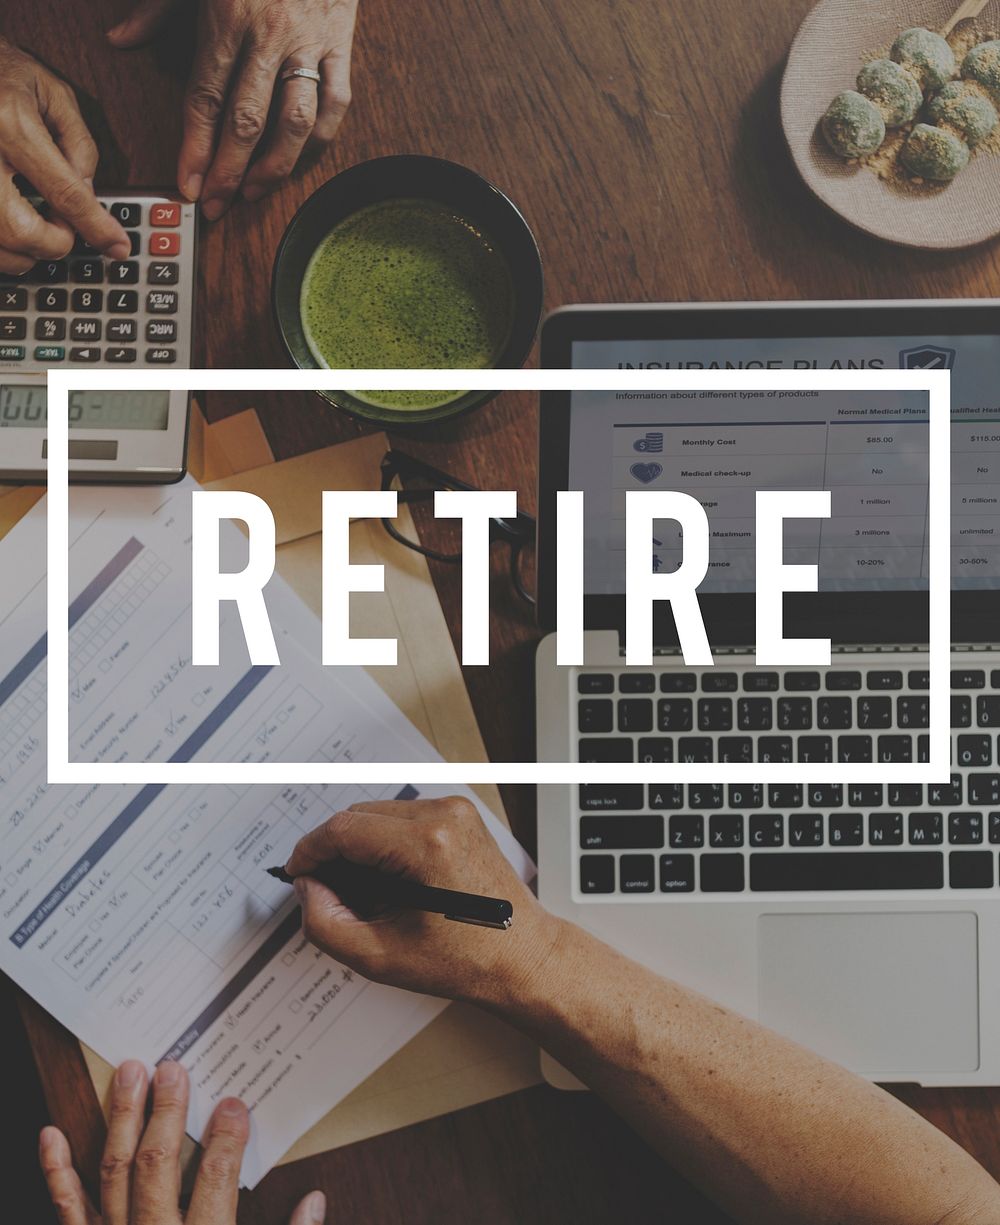 Retirenment Plan Senior Adult Concept